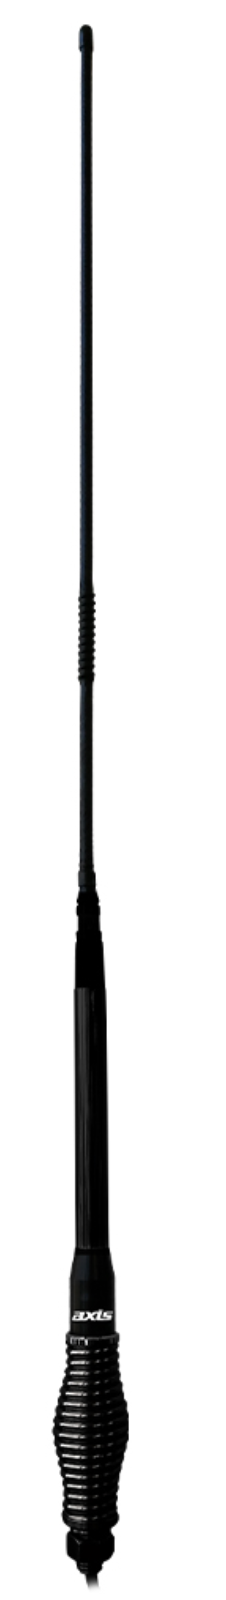 Axis Uhf Cb 7db Antenna Heavy Duty Spring 95.4cm AKU7